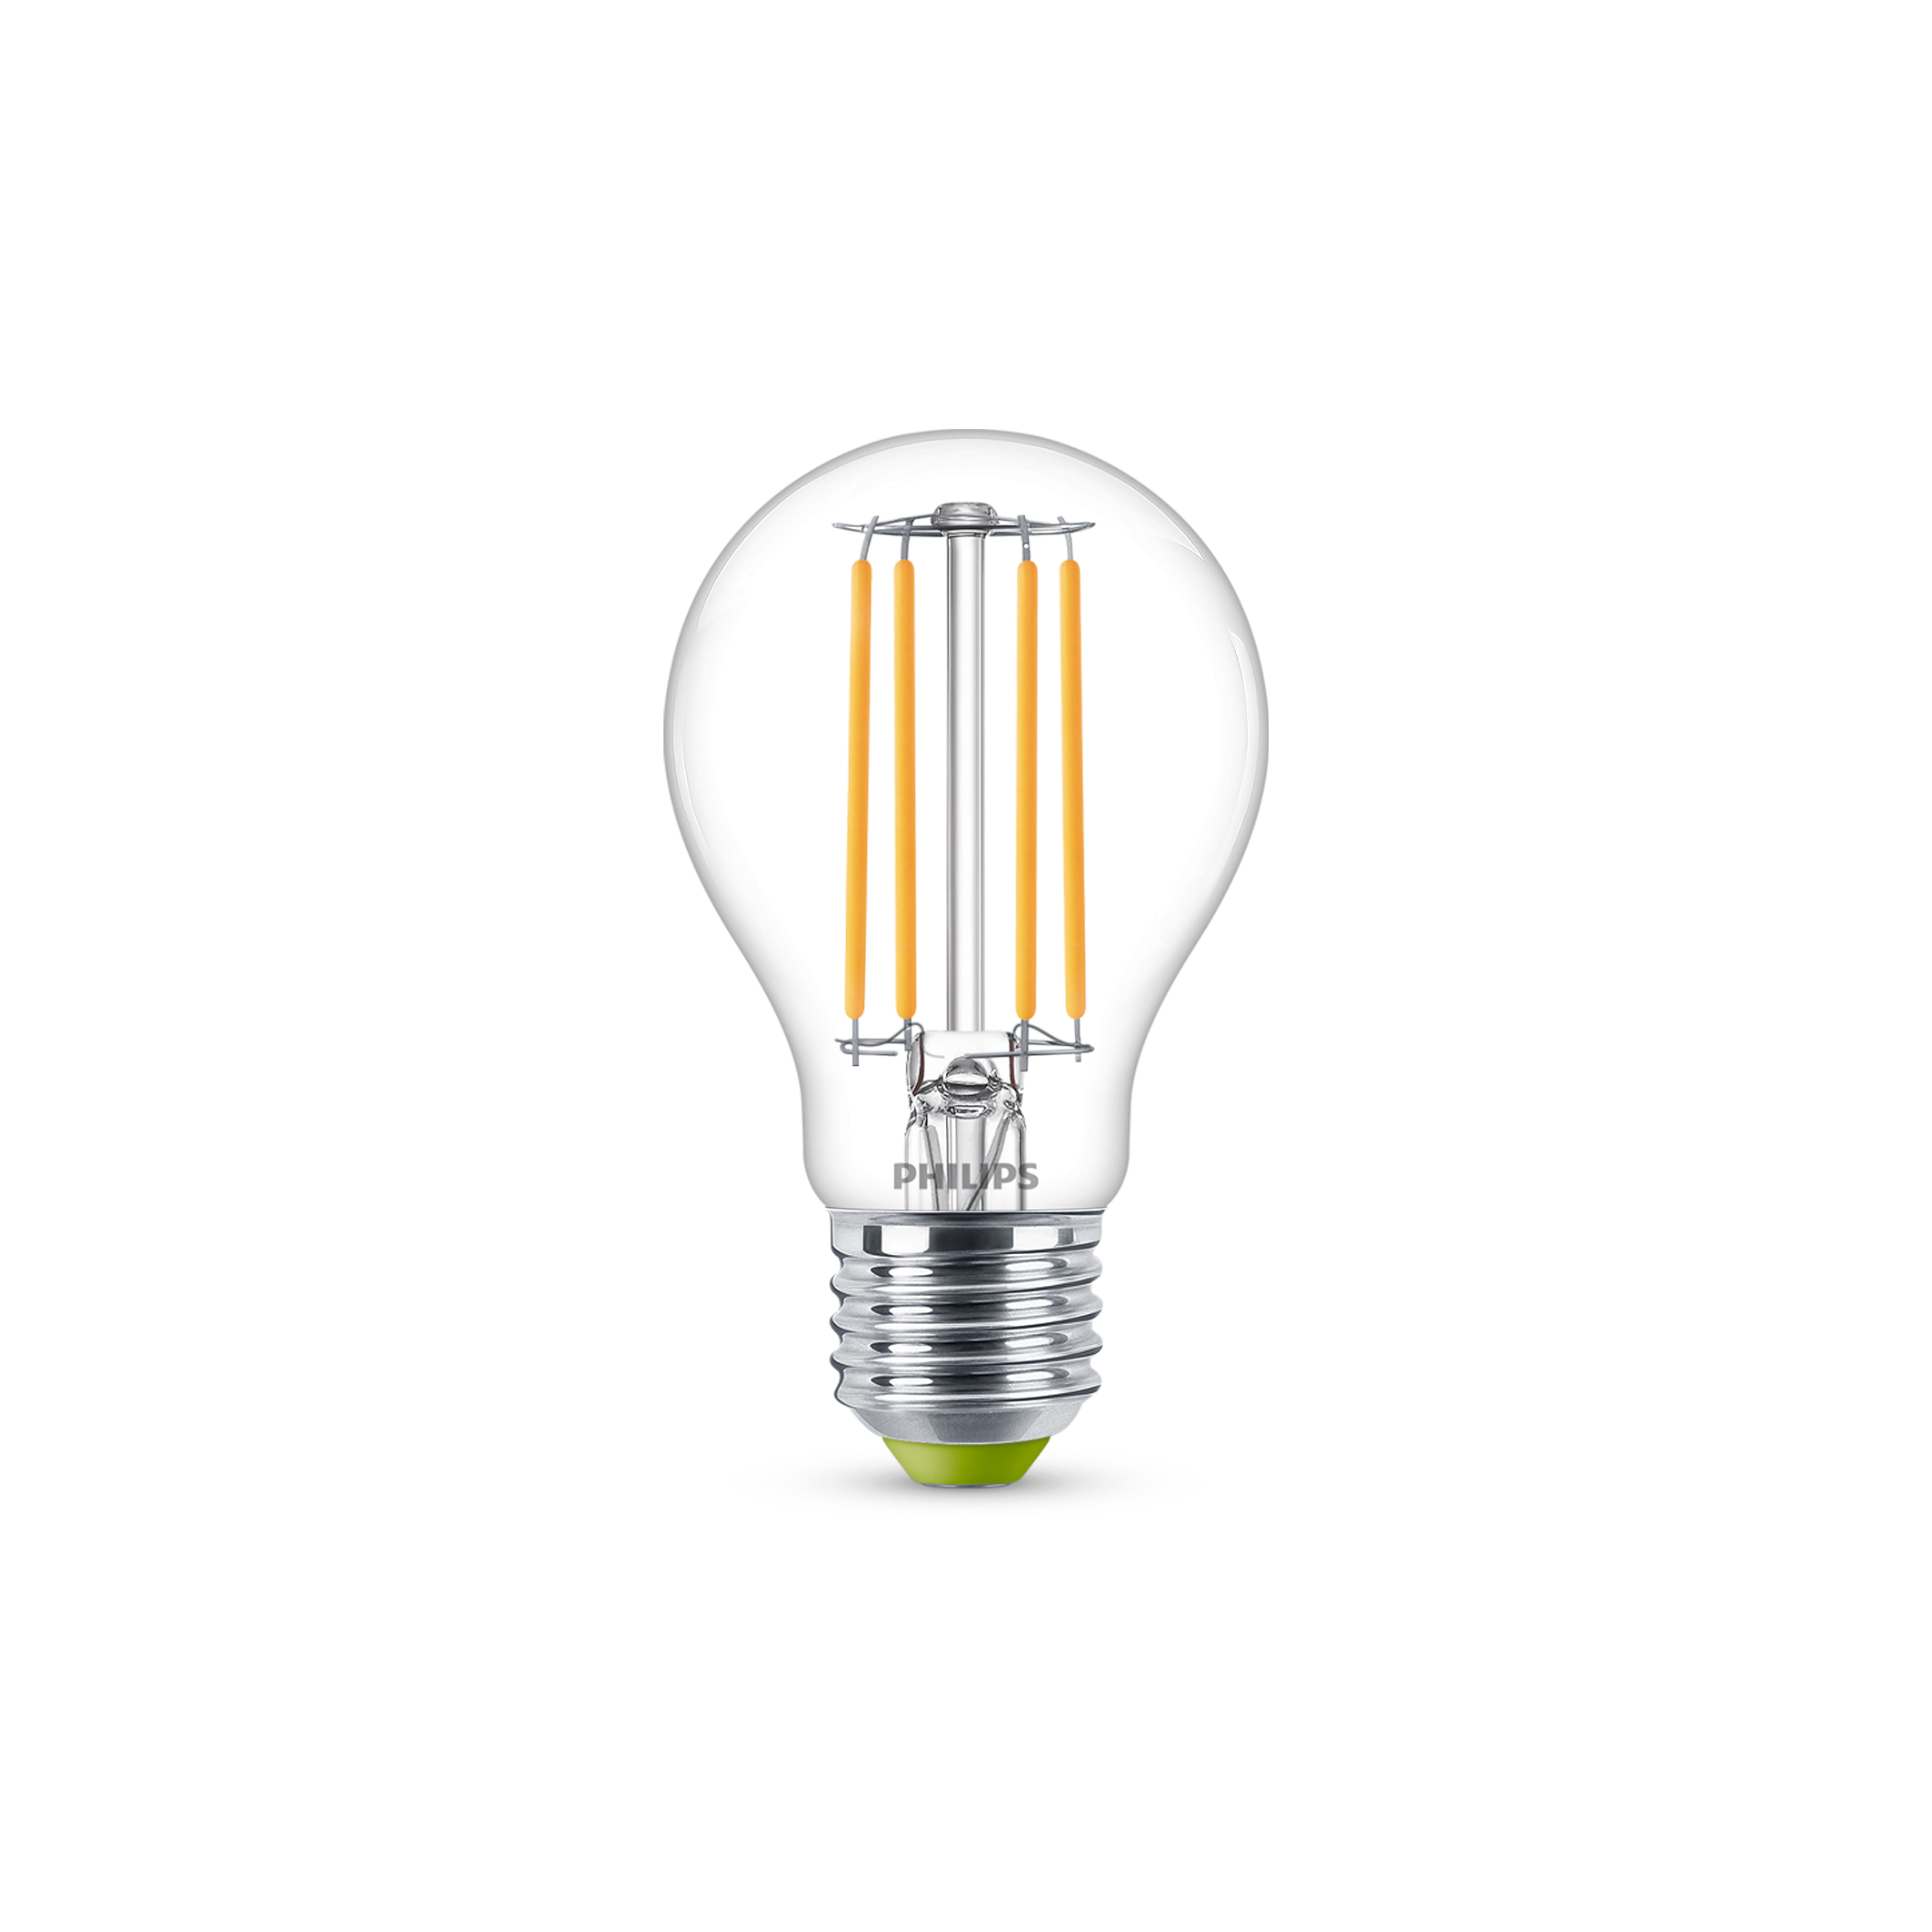 UltraEfficient LED bulb